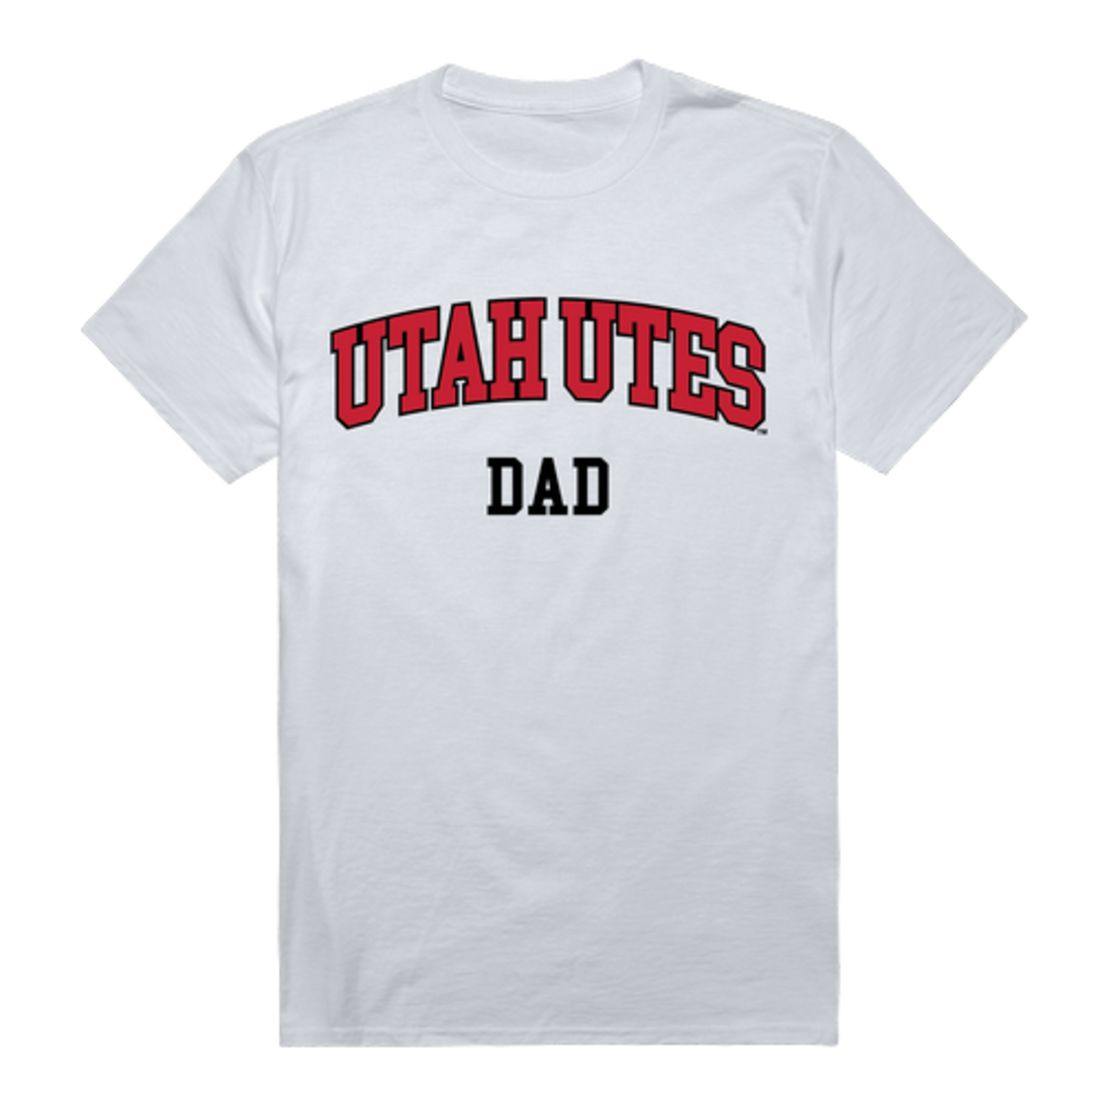 University of Utah Utes College Dad T-Shirt-Campus-Wardrobe